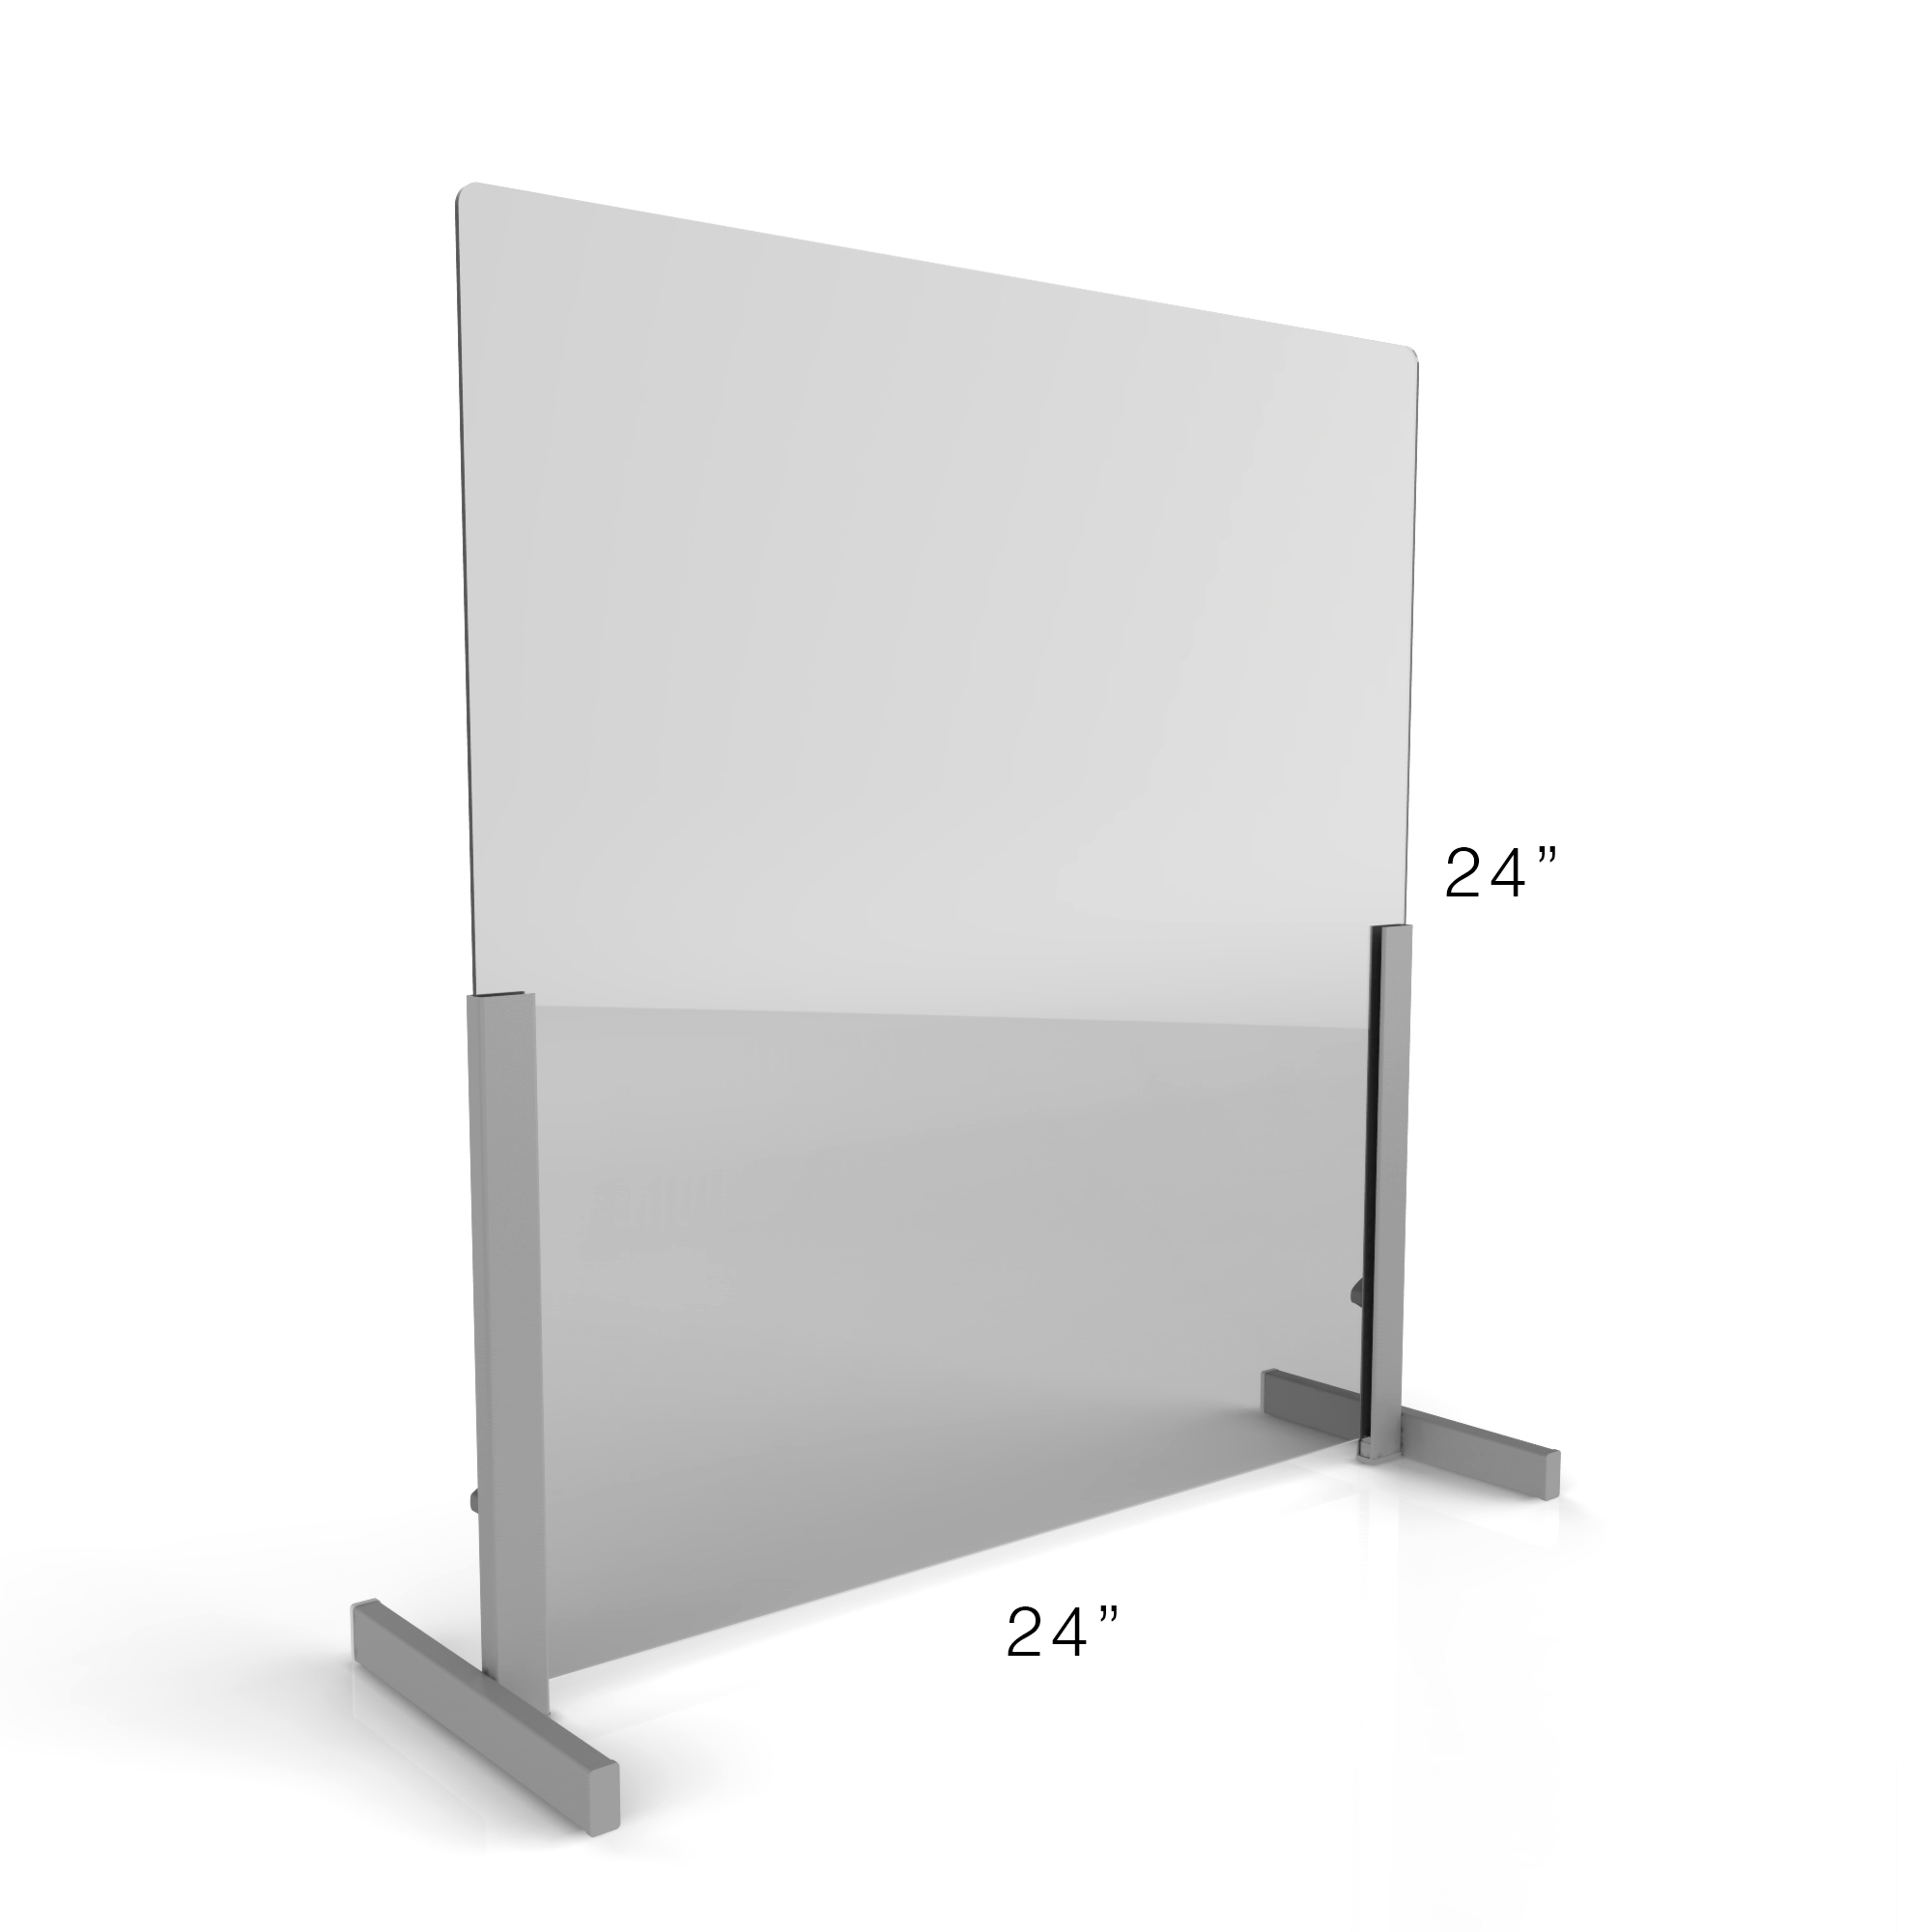 wellness panel, covid shield, plexiglass or acrylic divider